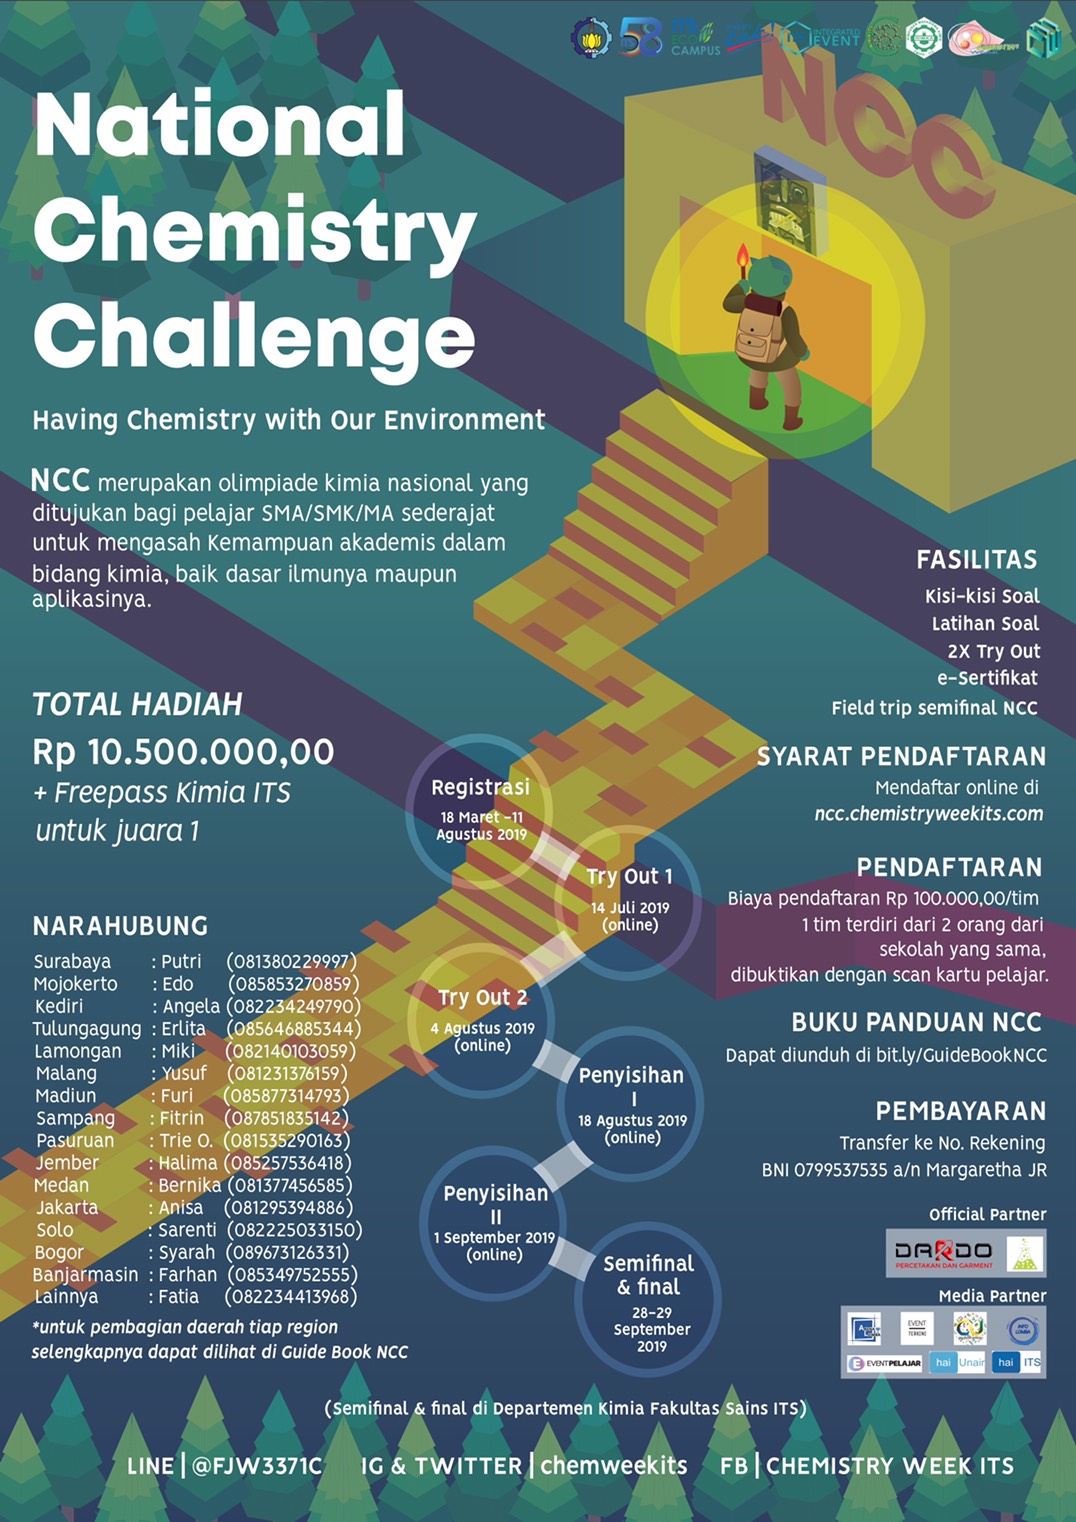 NCC (National Chemistry Challenge)